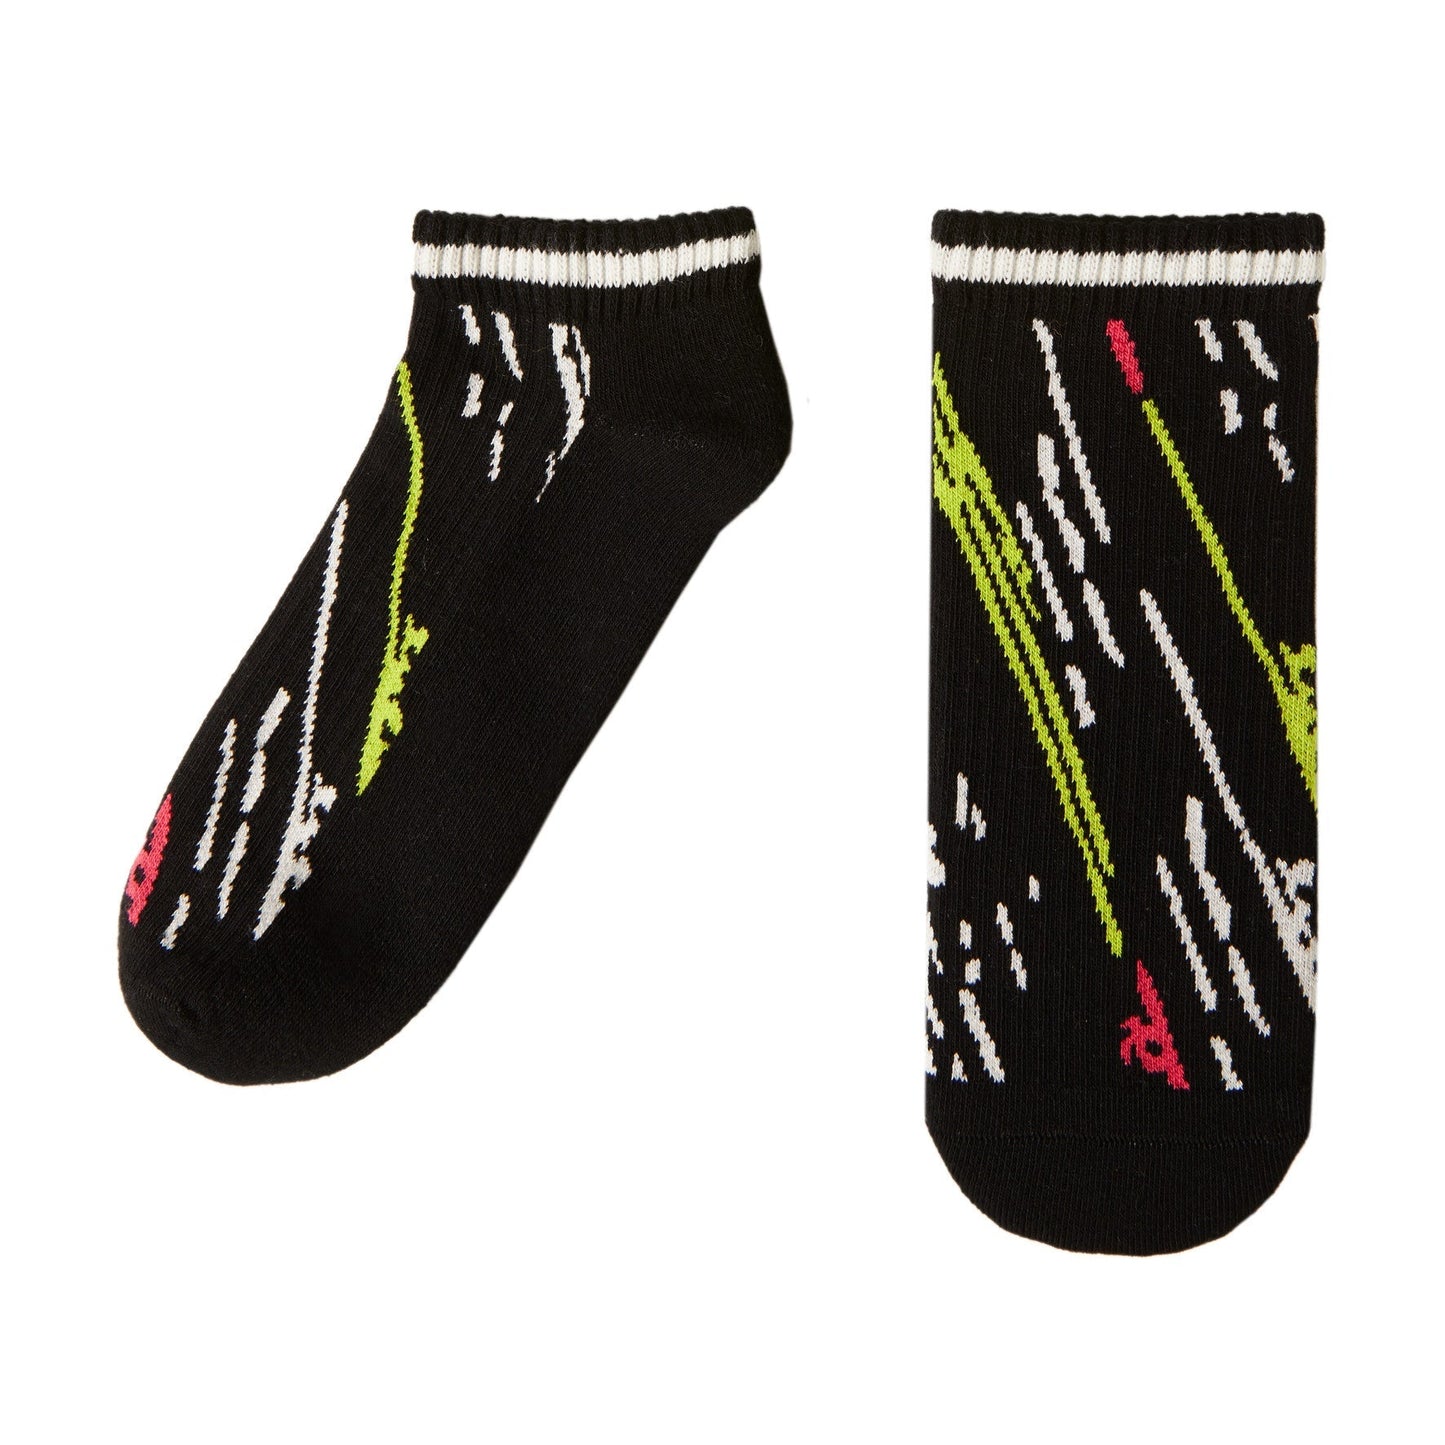 Falling Performance Ankle Socks - Black/Print